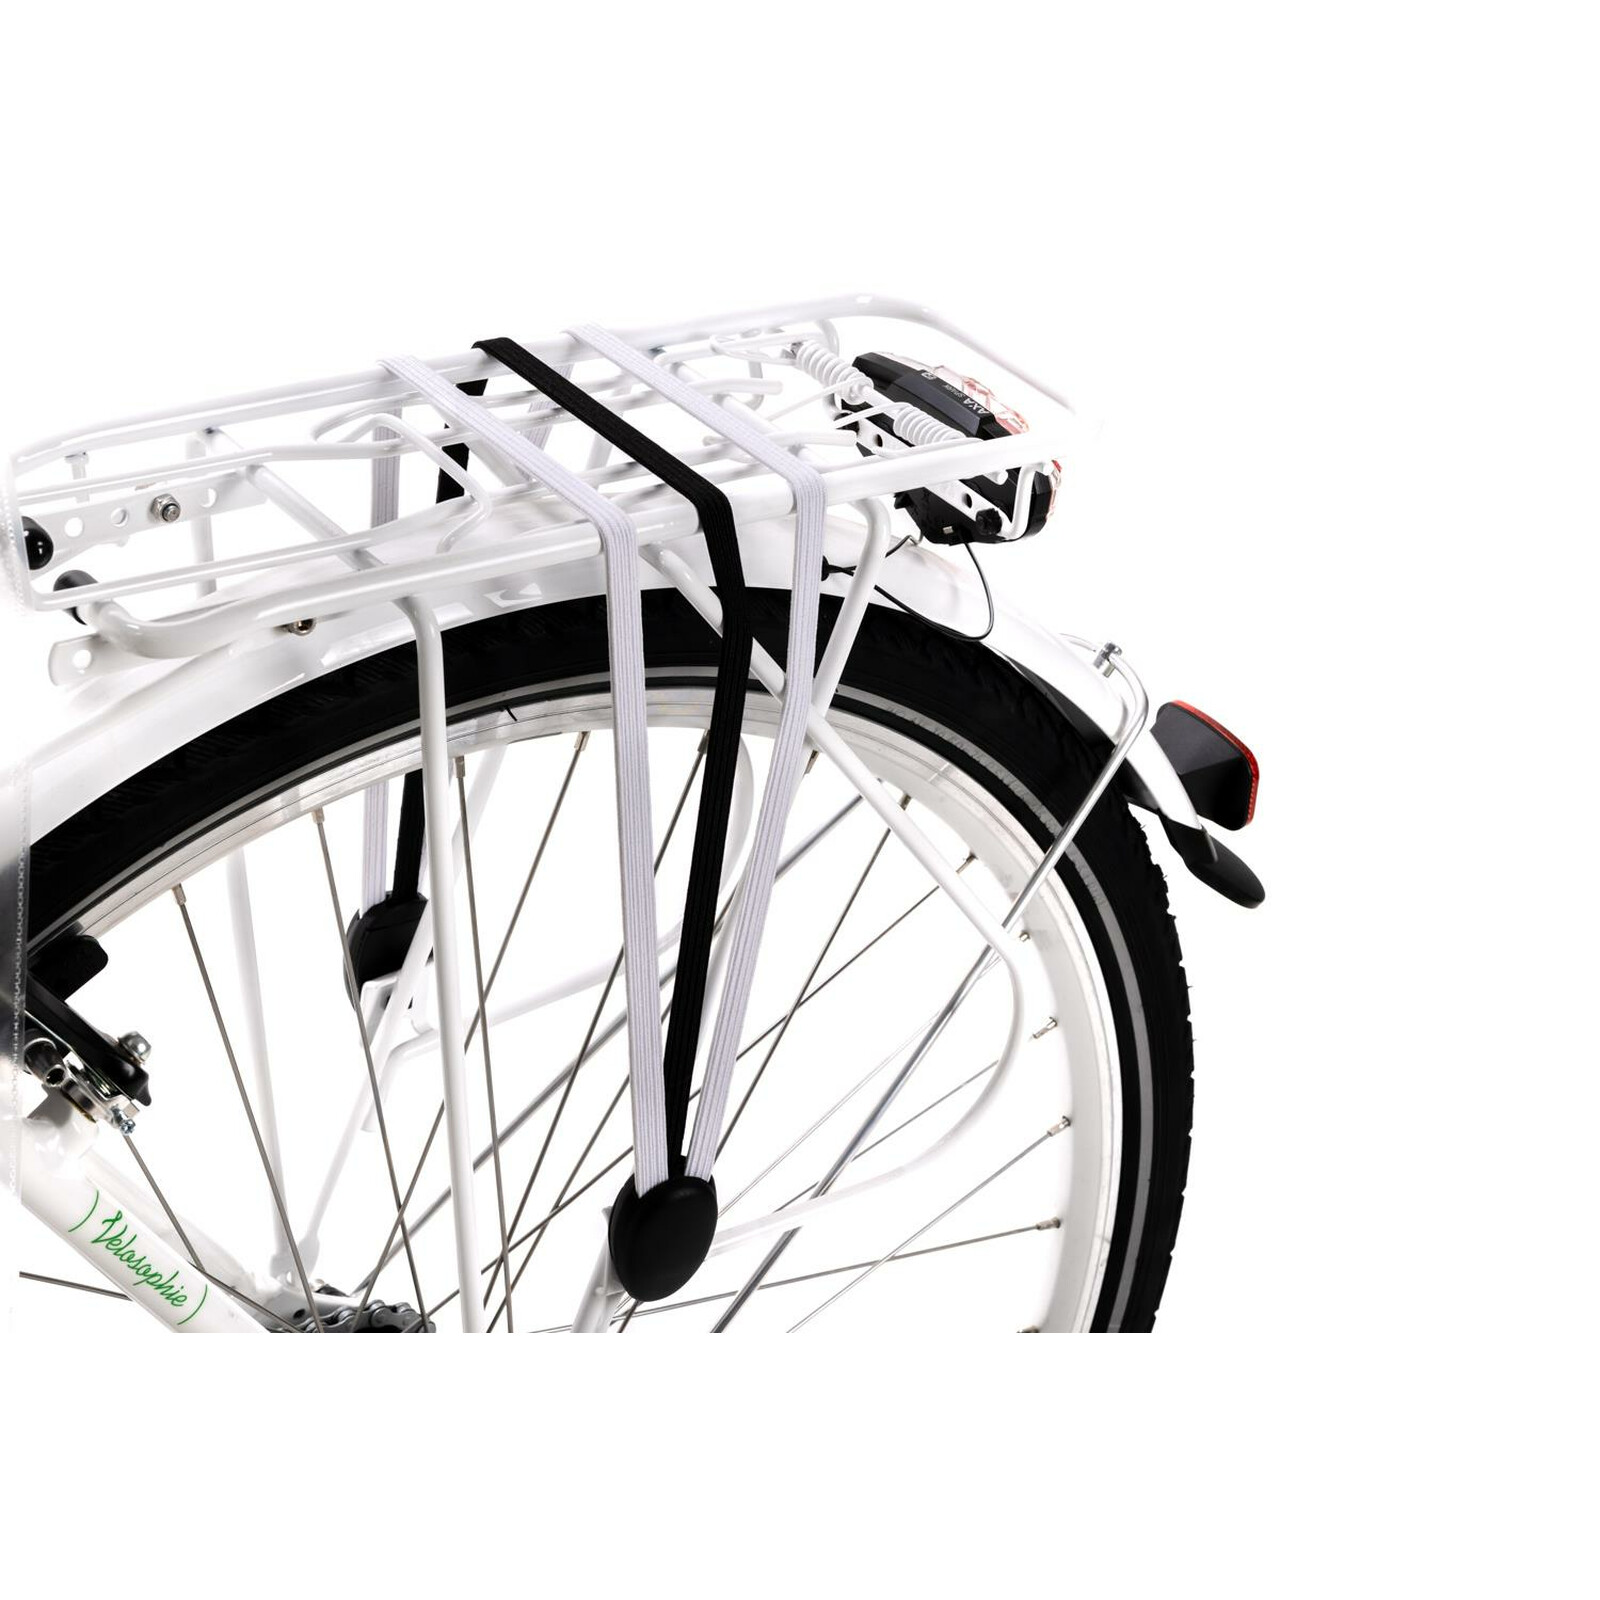 Fahrrad Spann Gummi für Gepäckträger Spannband Gepäck Gurt